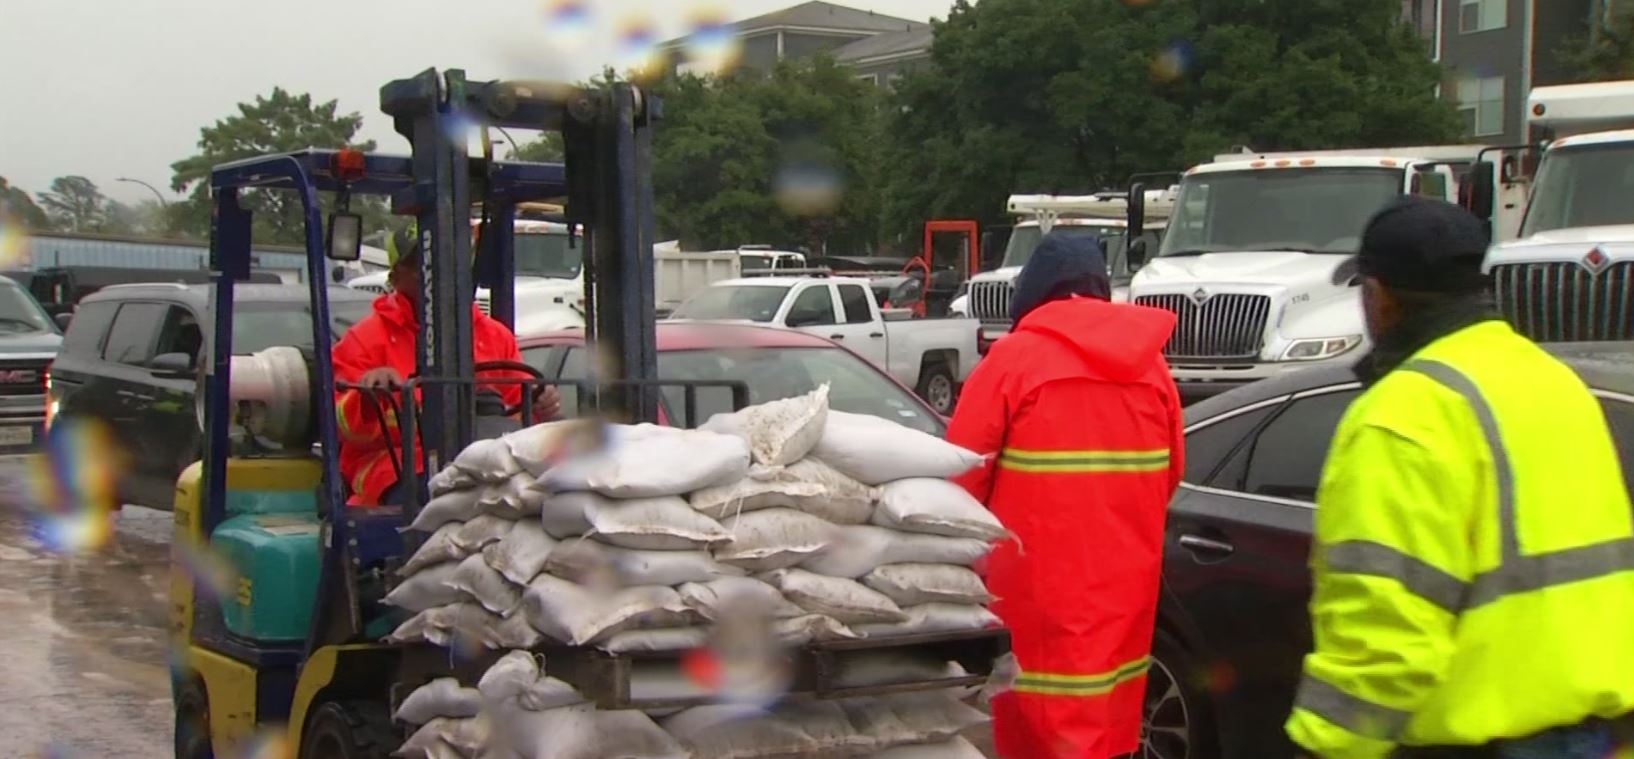 Arlington Giving Out Free Sandbags for Flooding